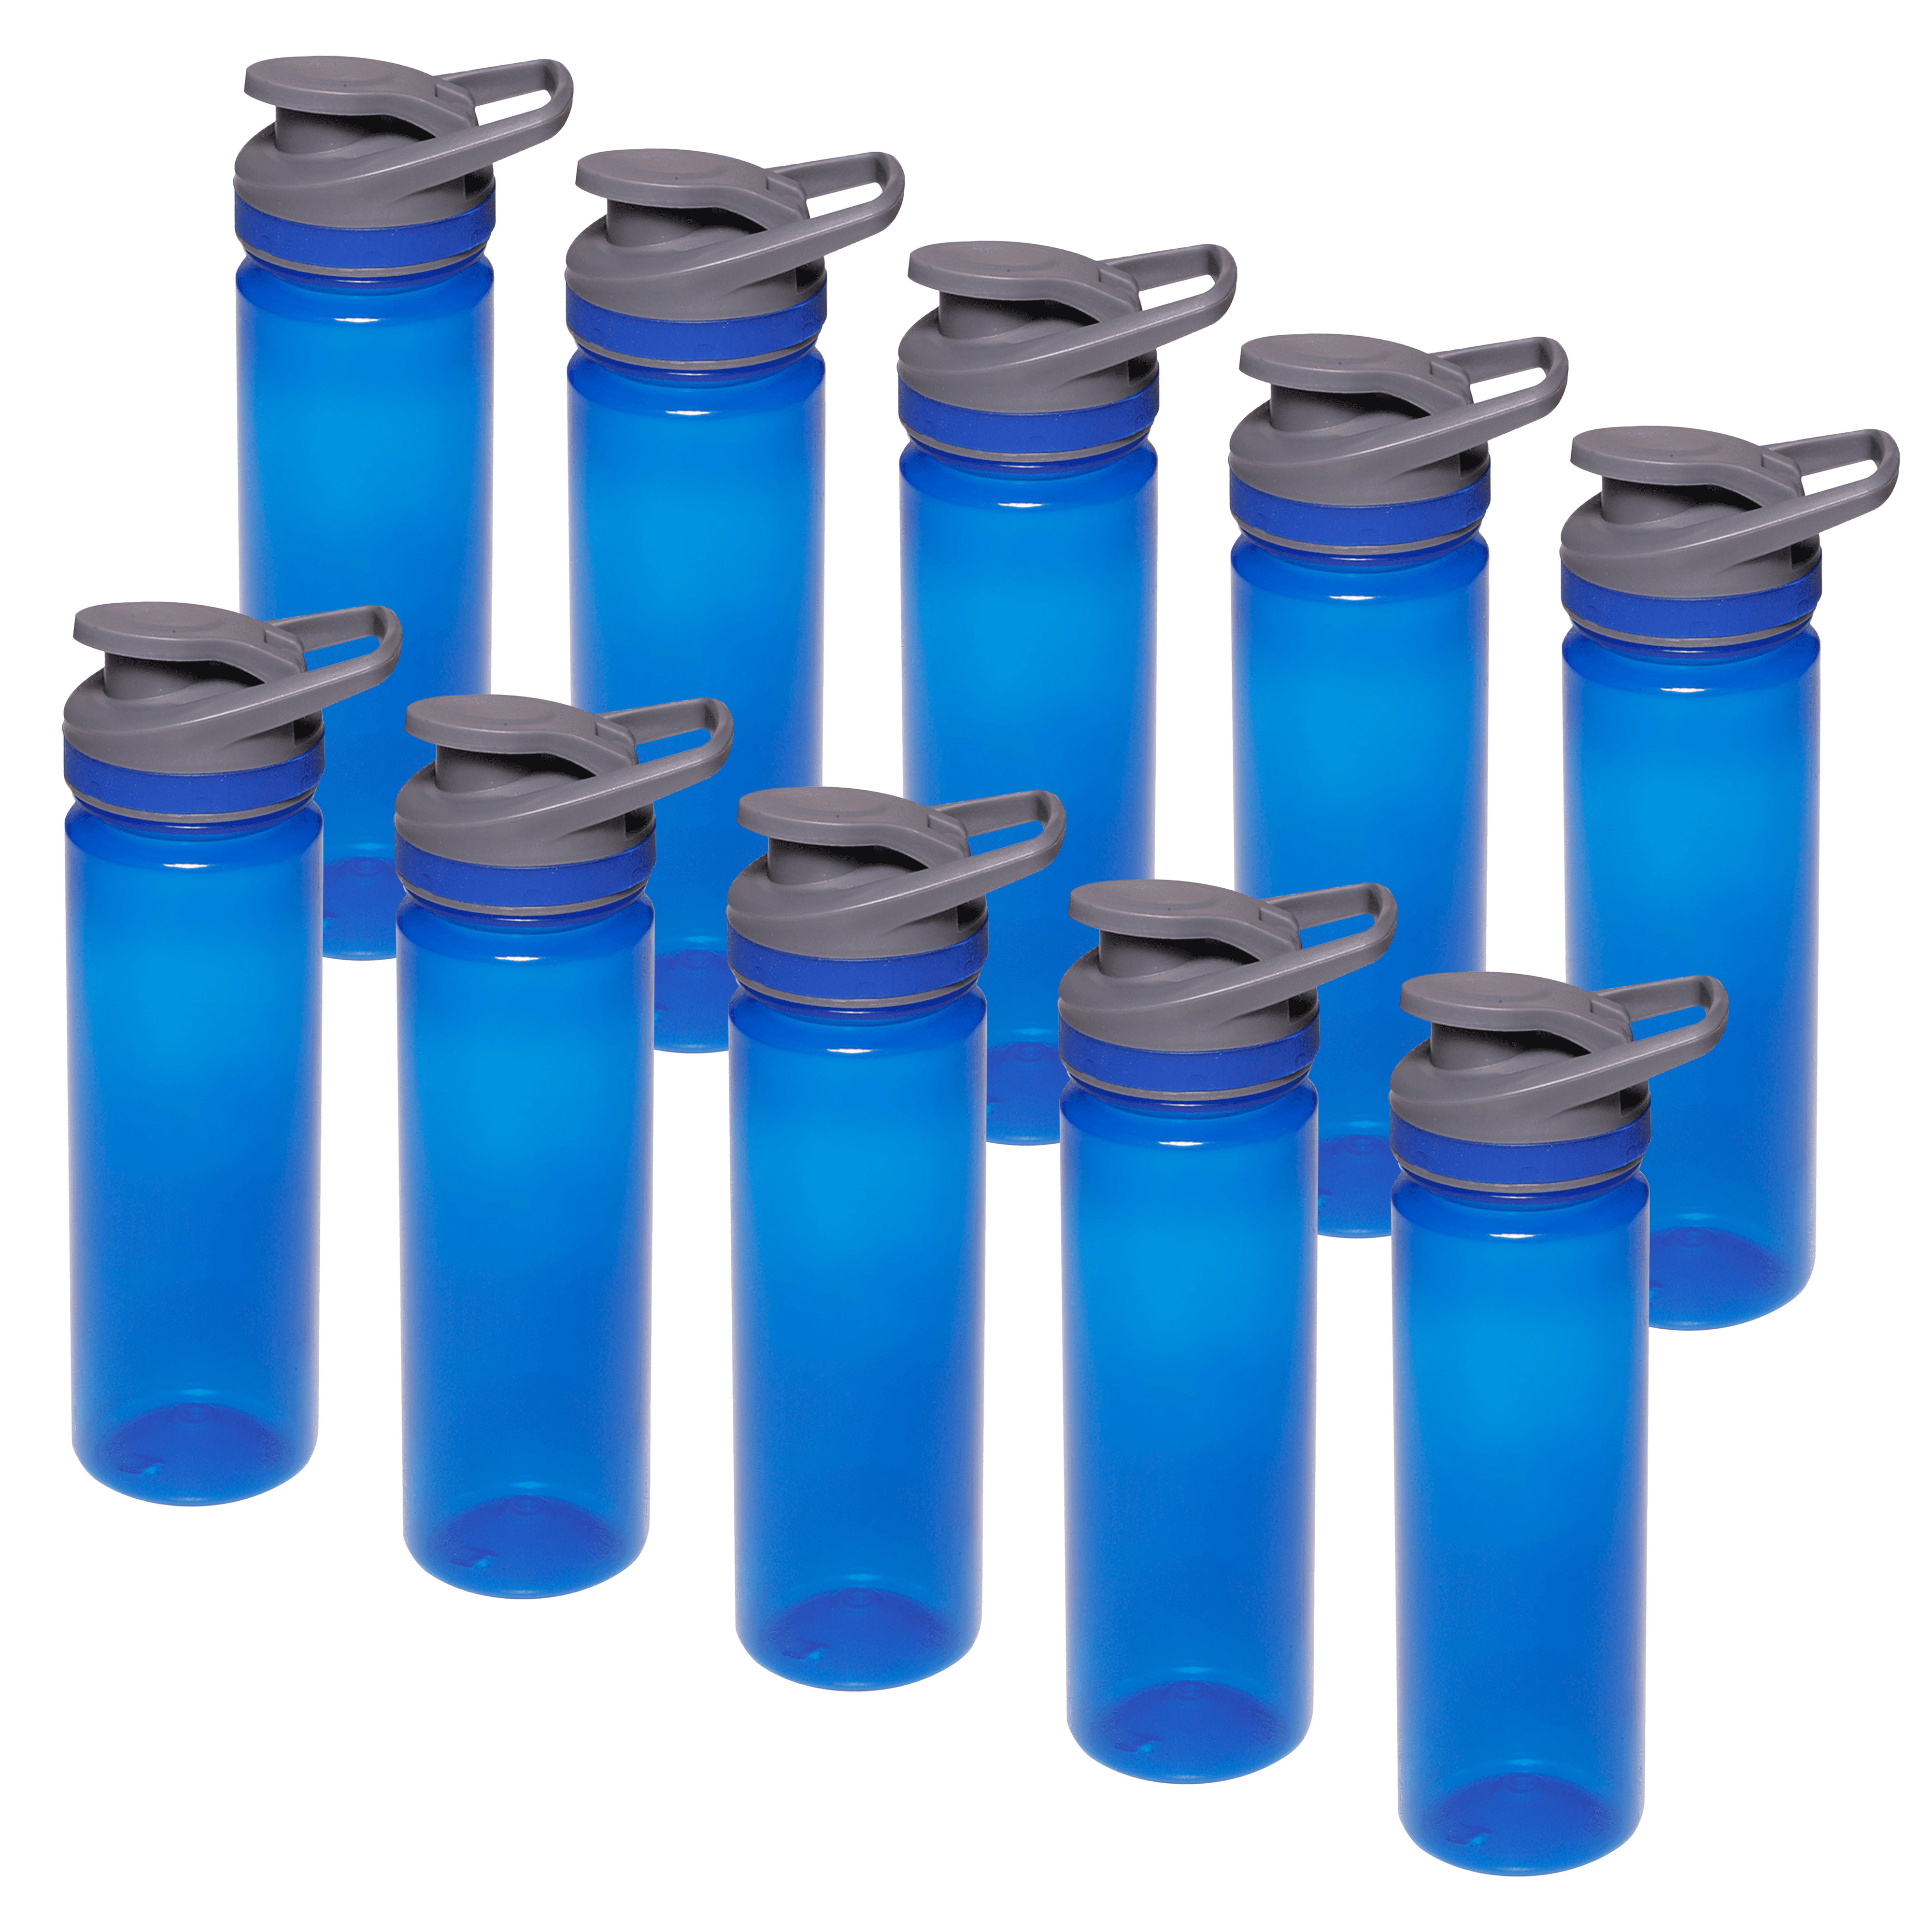 4pcs Plastic Water Bottles Bulk 15oz Reusable Sports Water Bottle